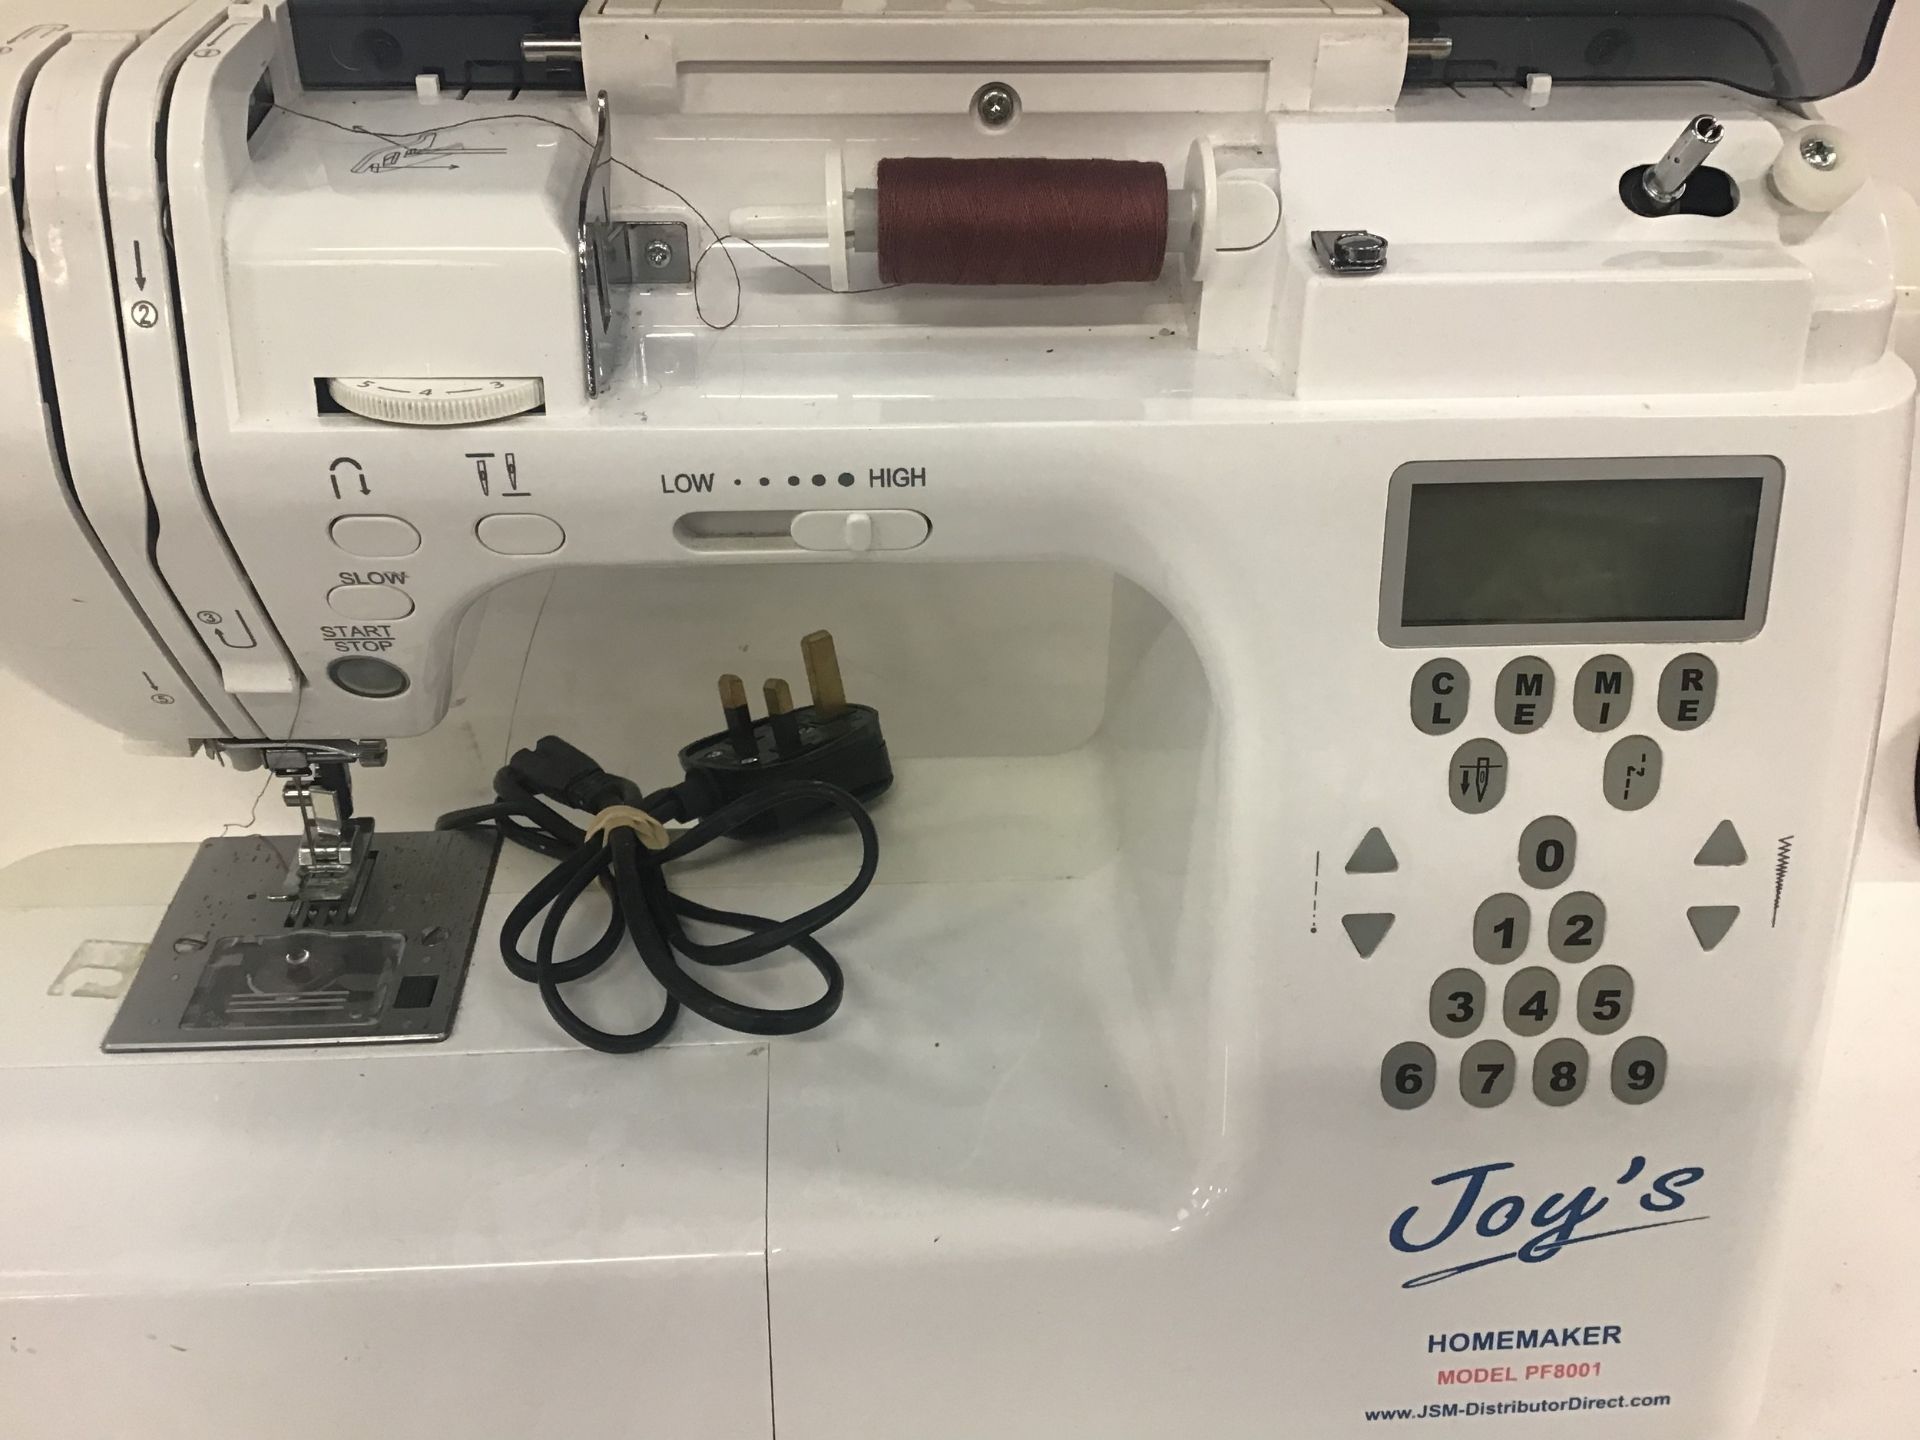 Joy’s Homemaker electric sewing machine model No. PF8001.